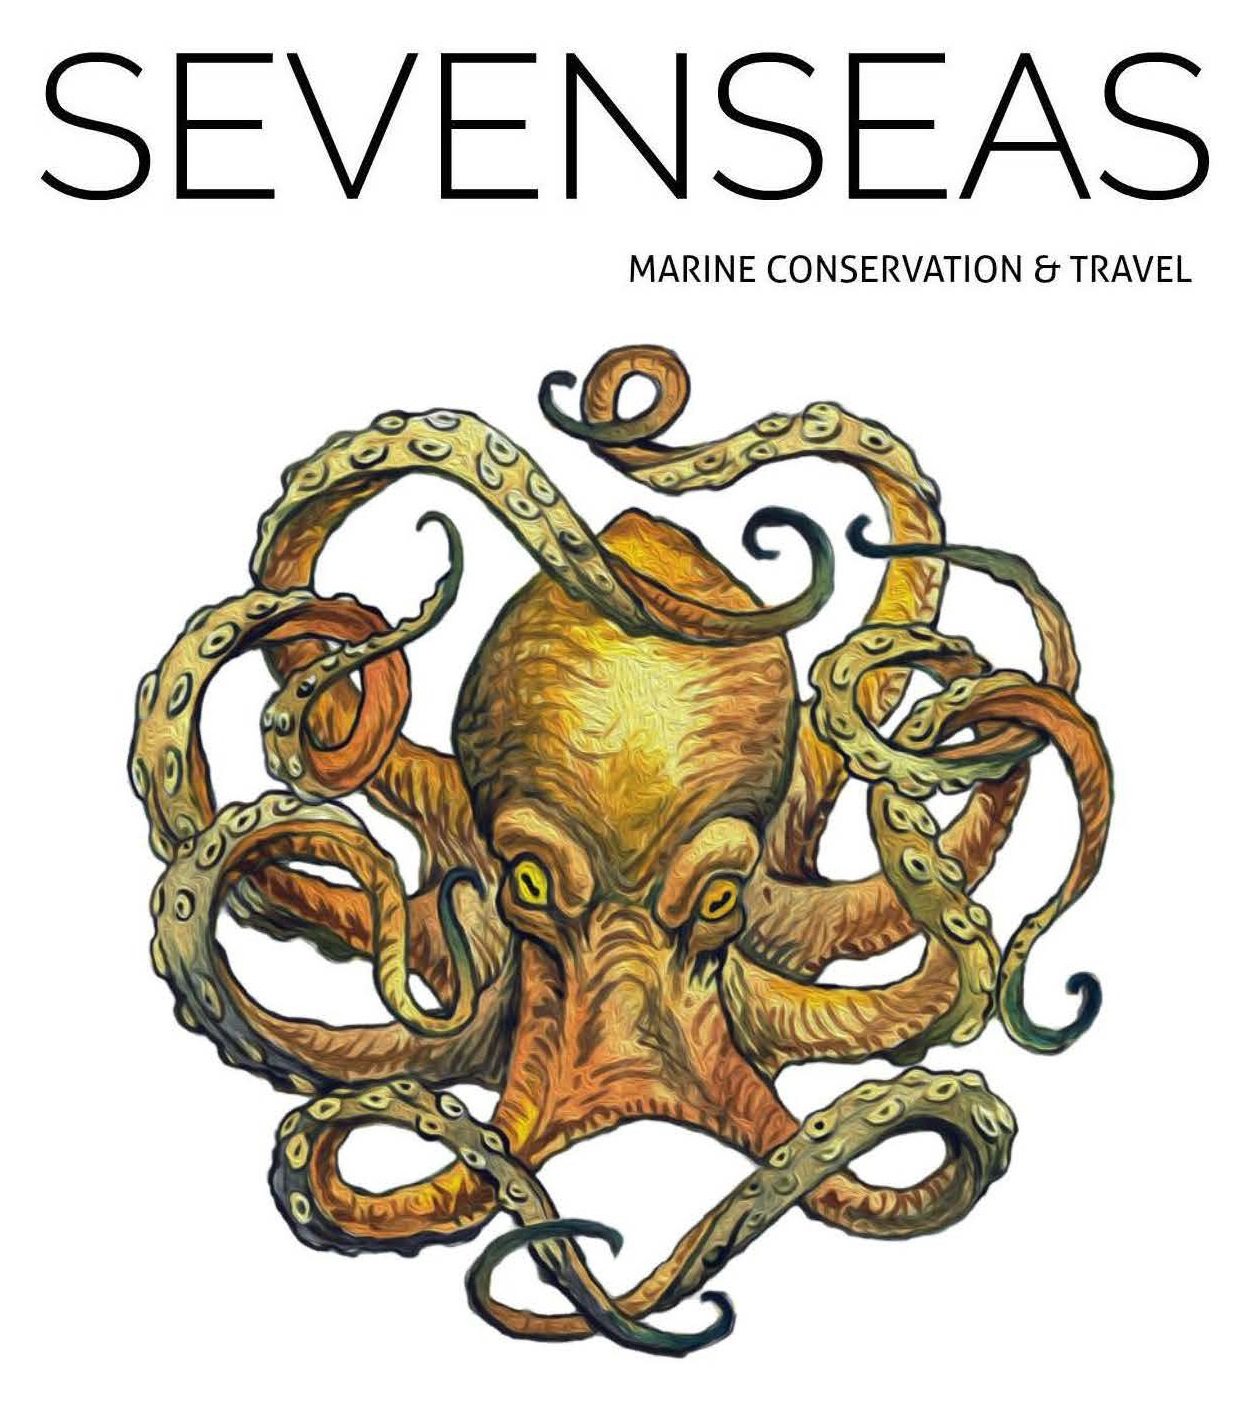 SEVENSEAS Magazine